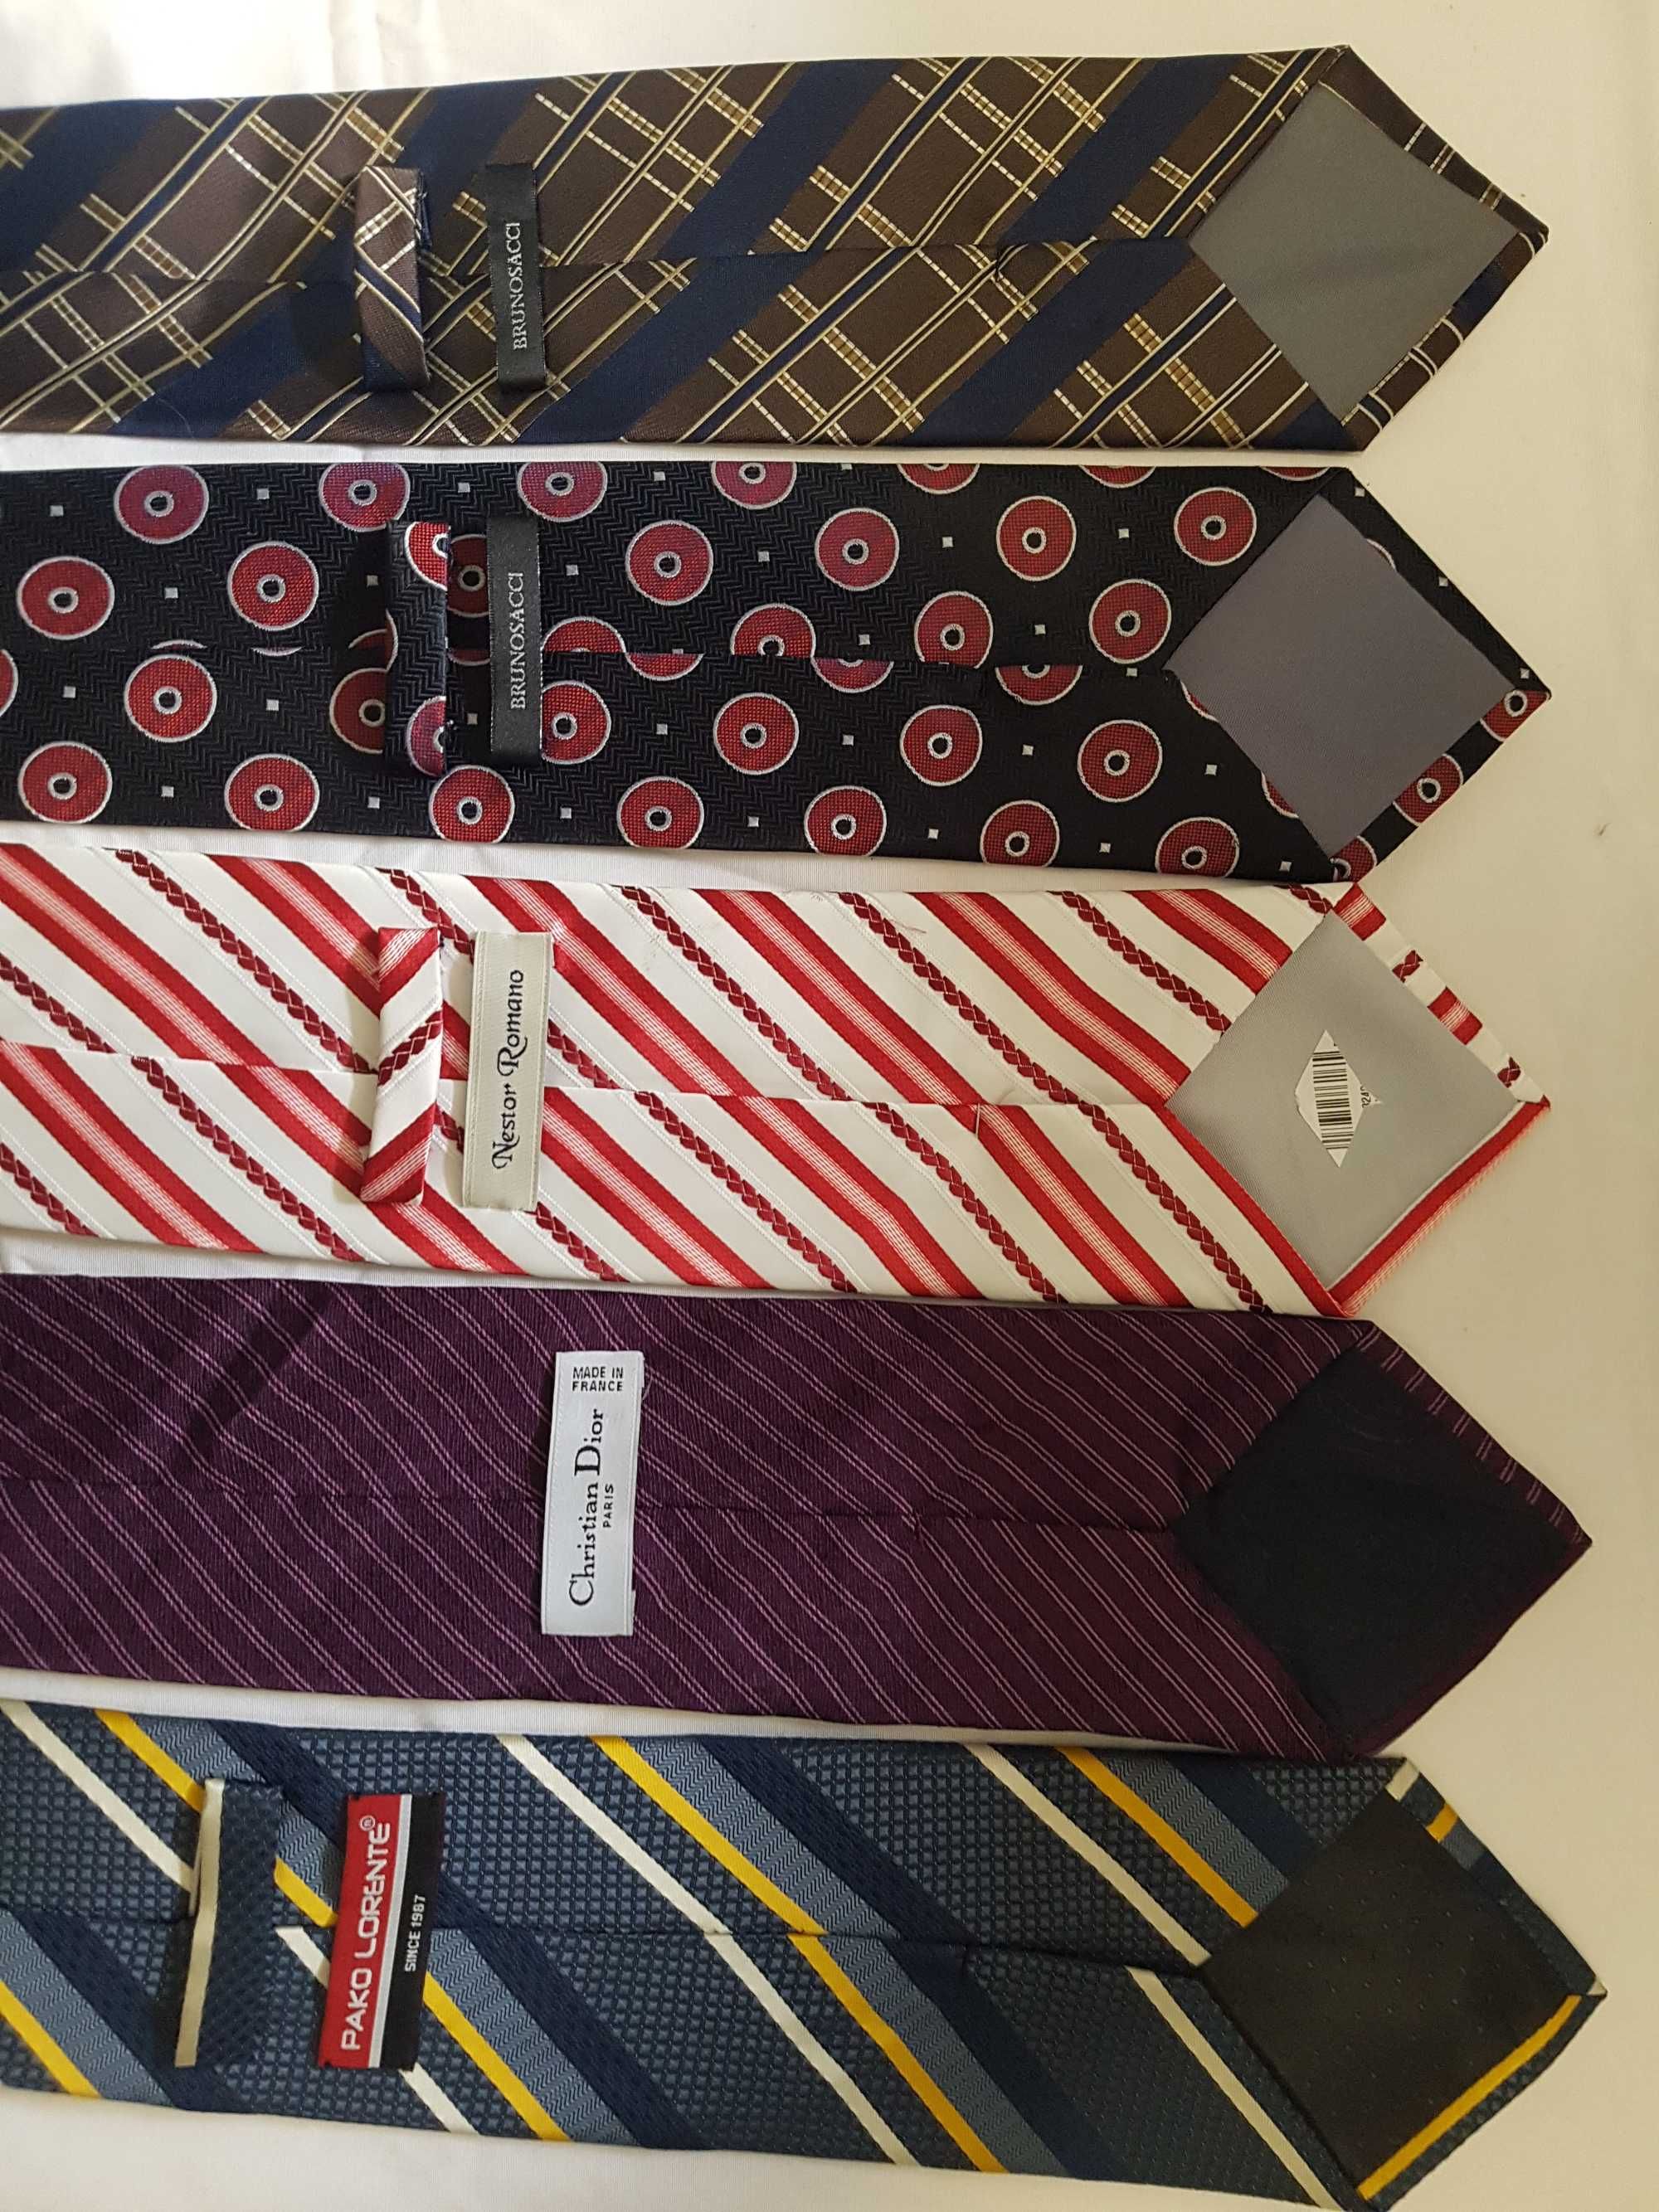 20 cravate de lux diverse marci italiene